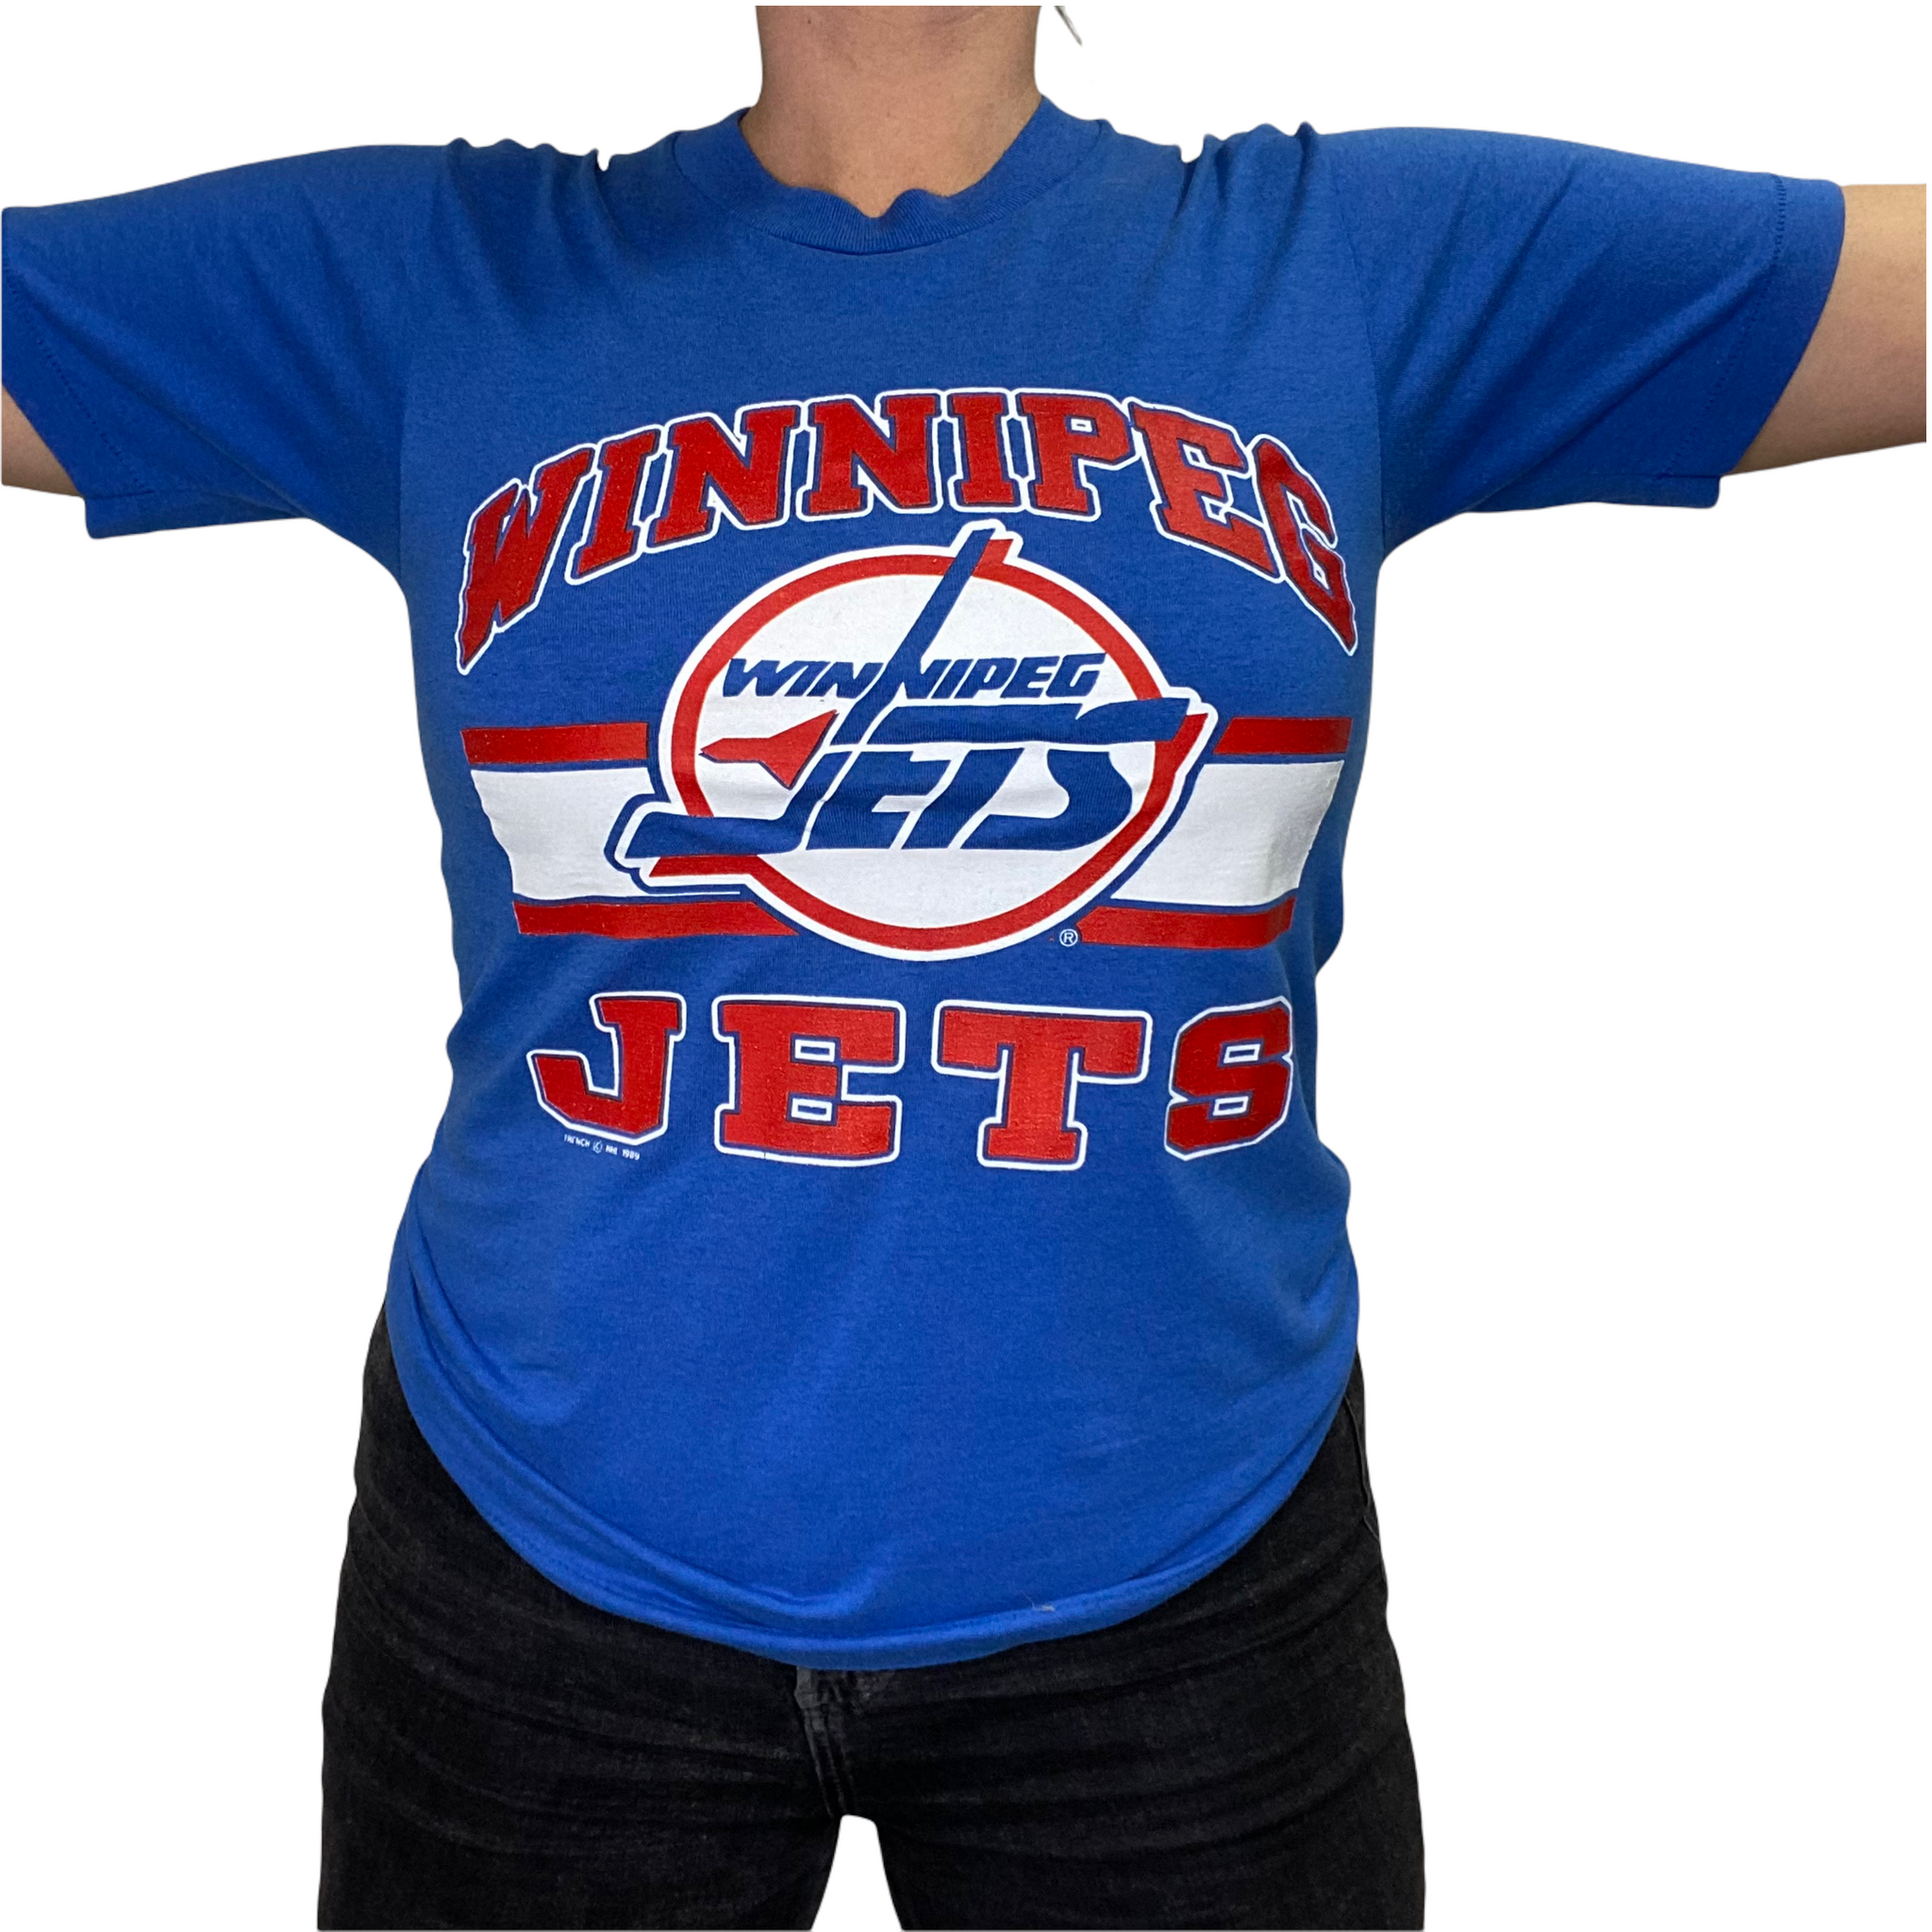 The Winnipeg Jets Old Jersey